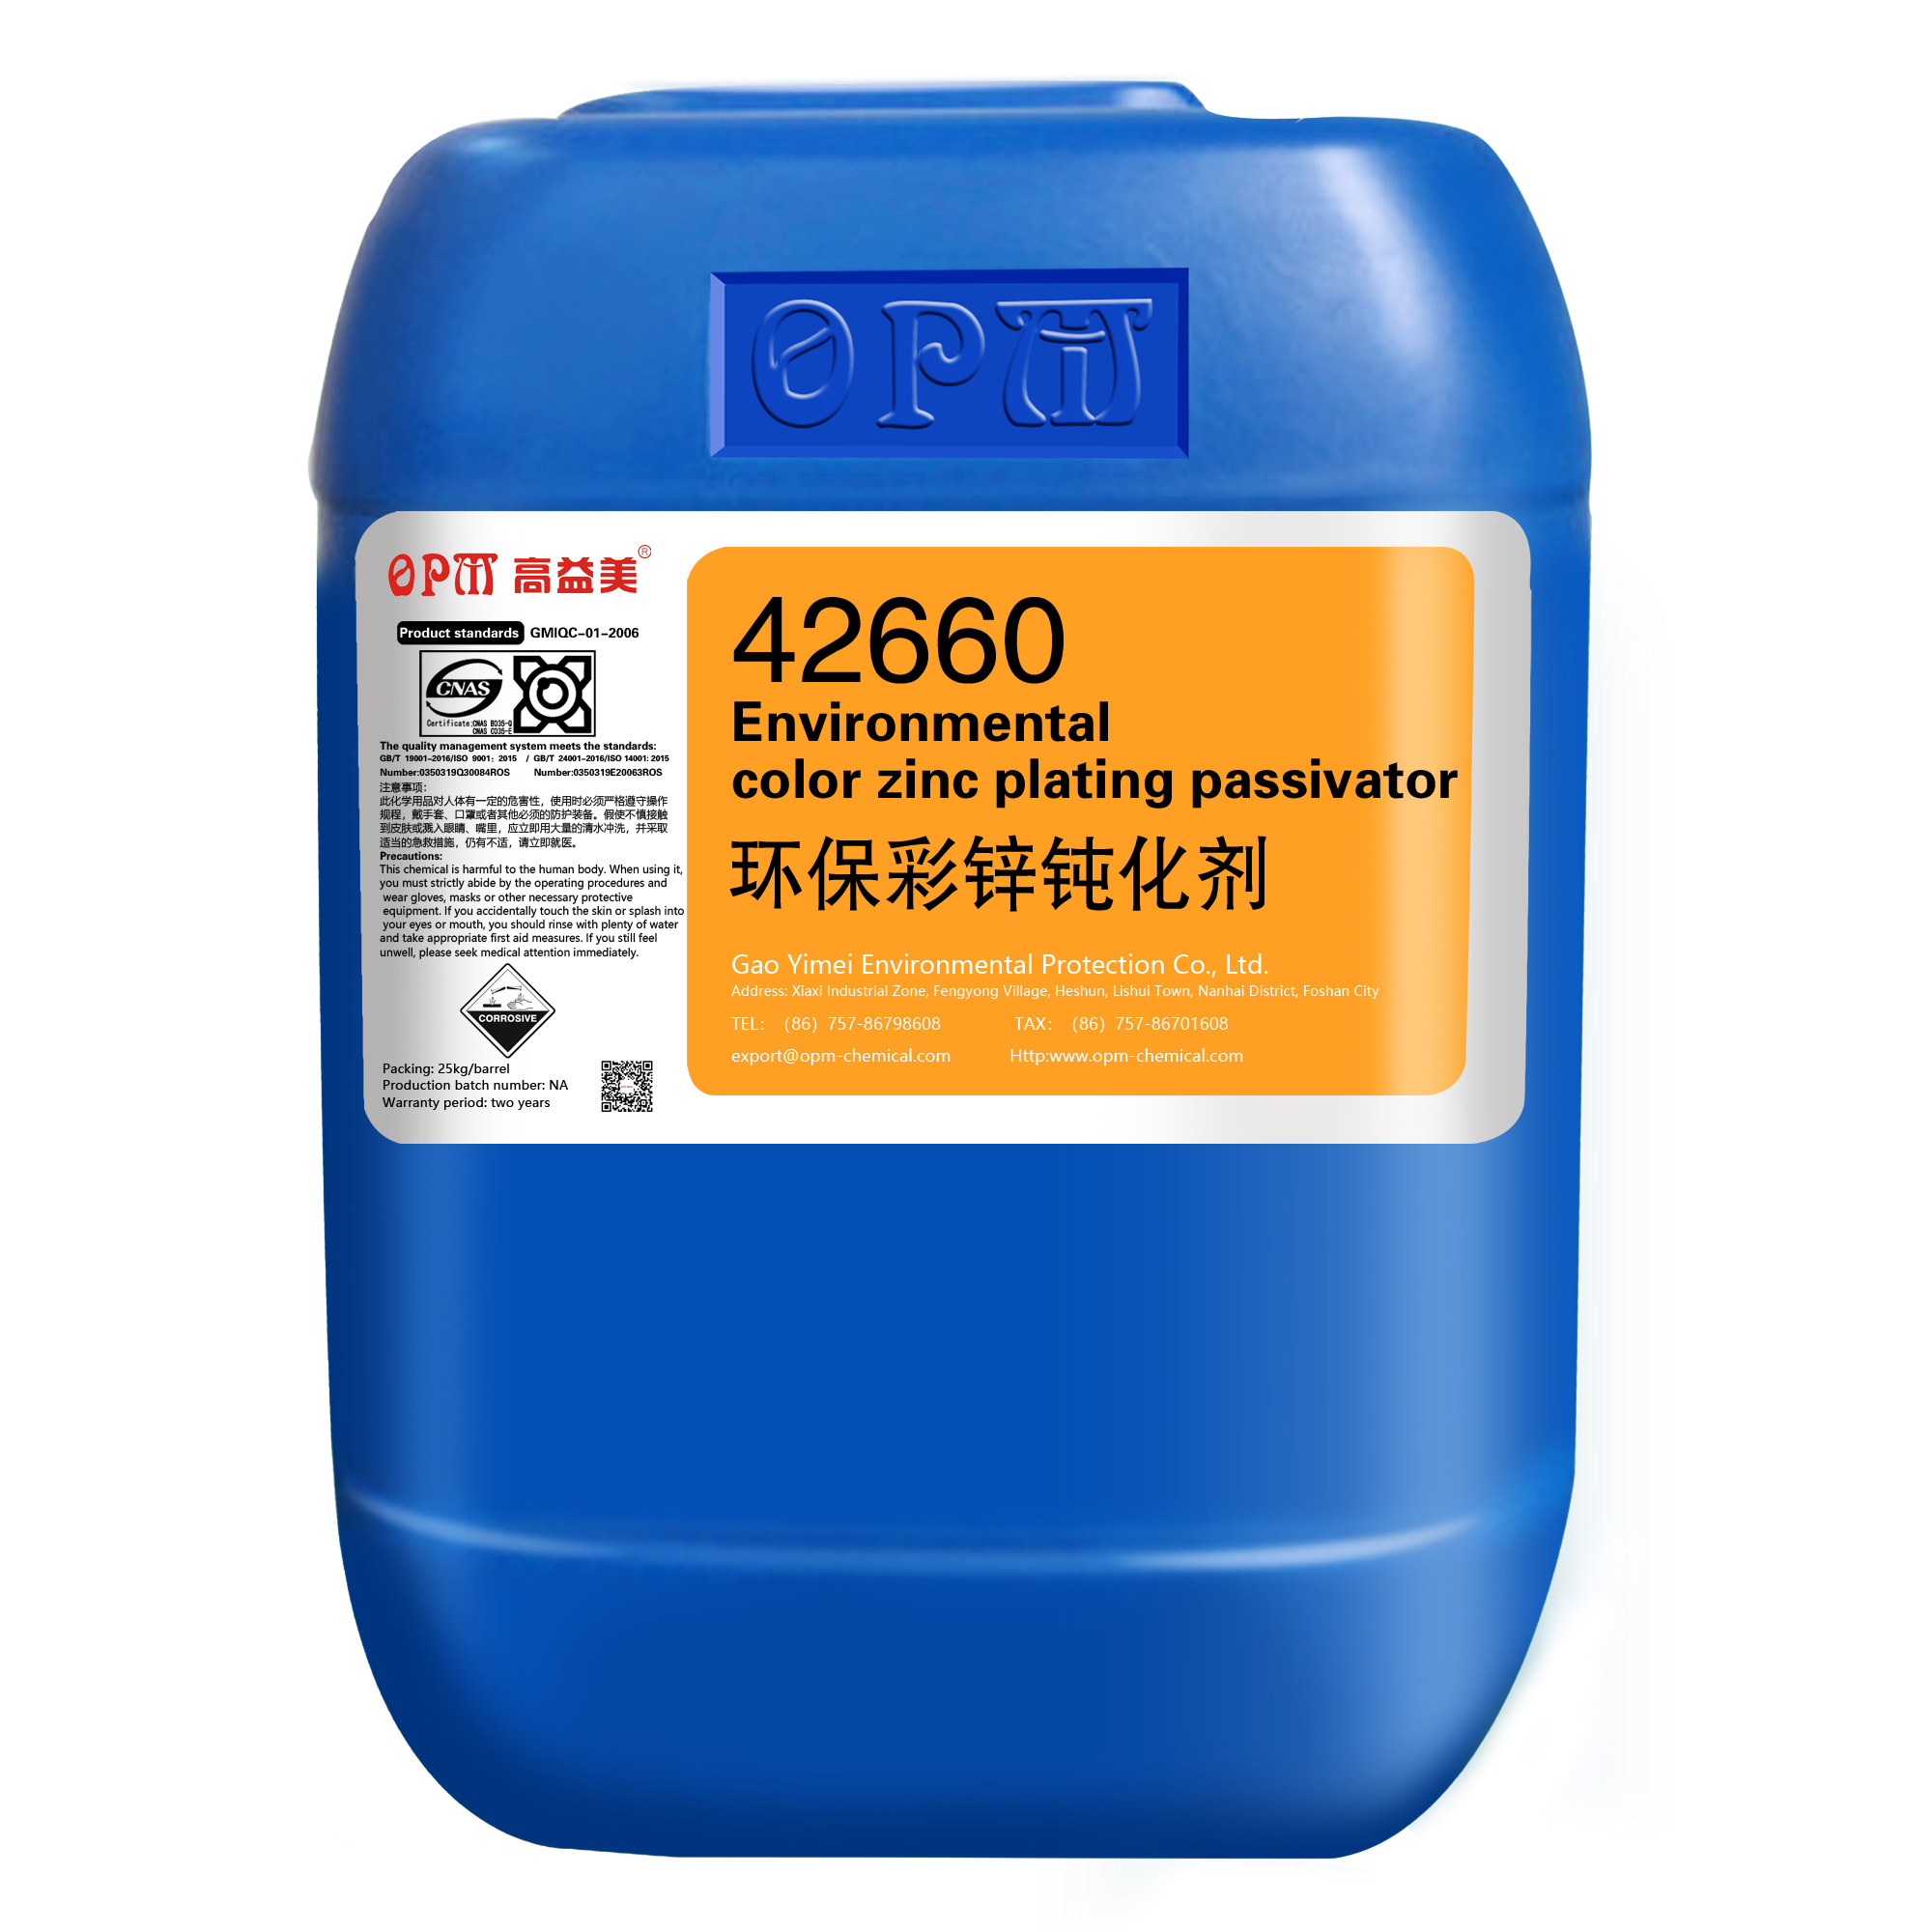 42660 Environmental color zinc plating passivator